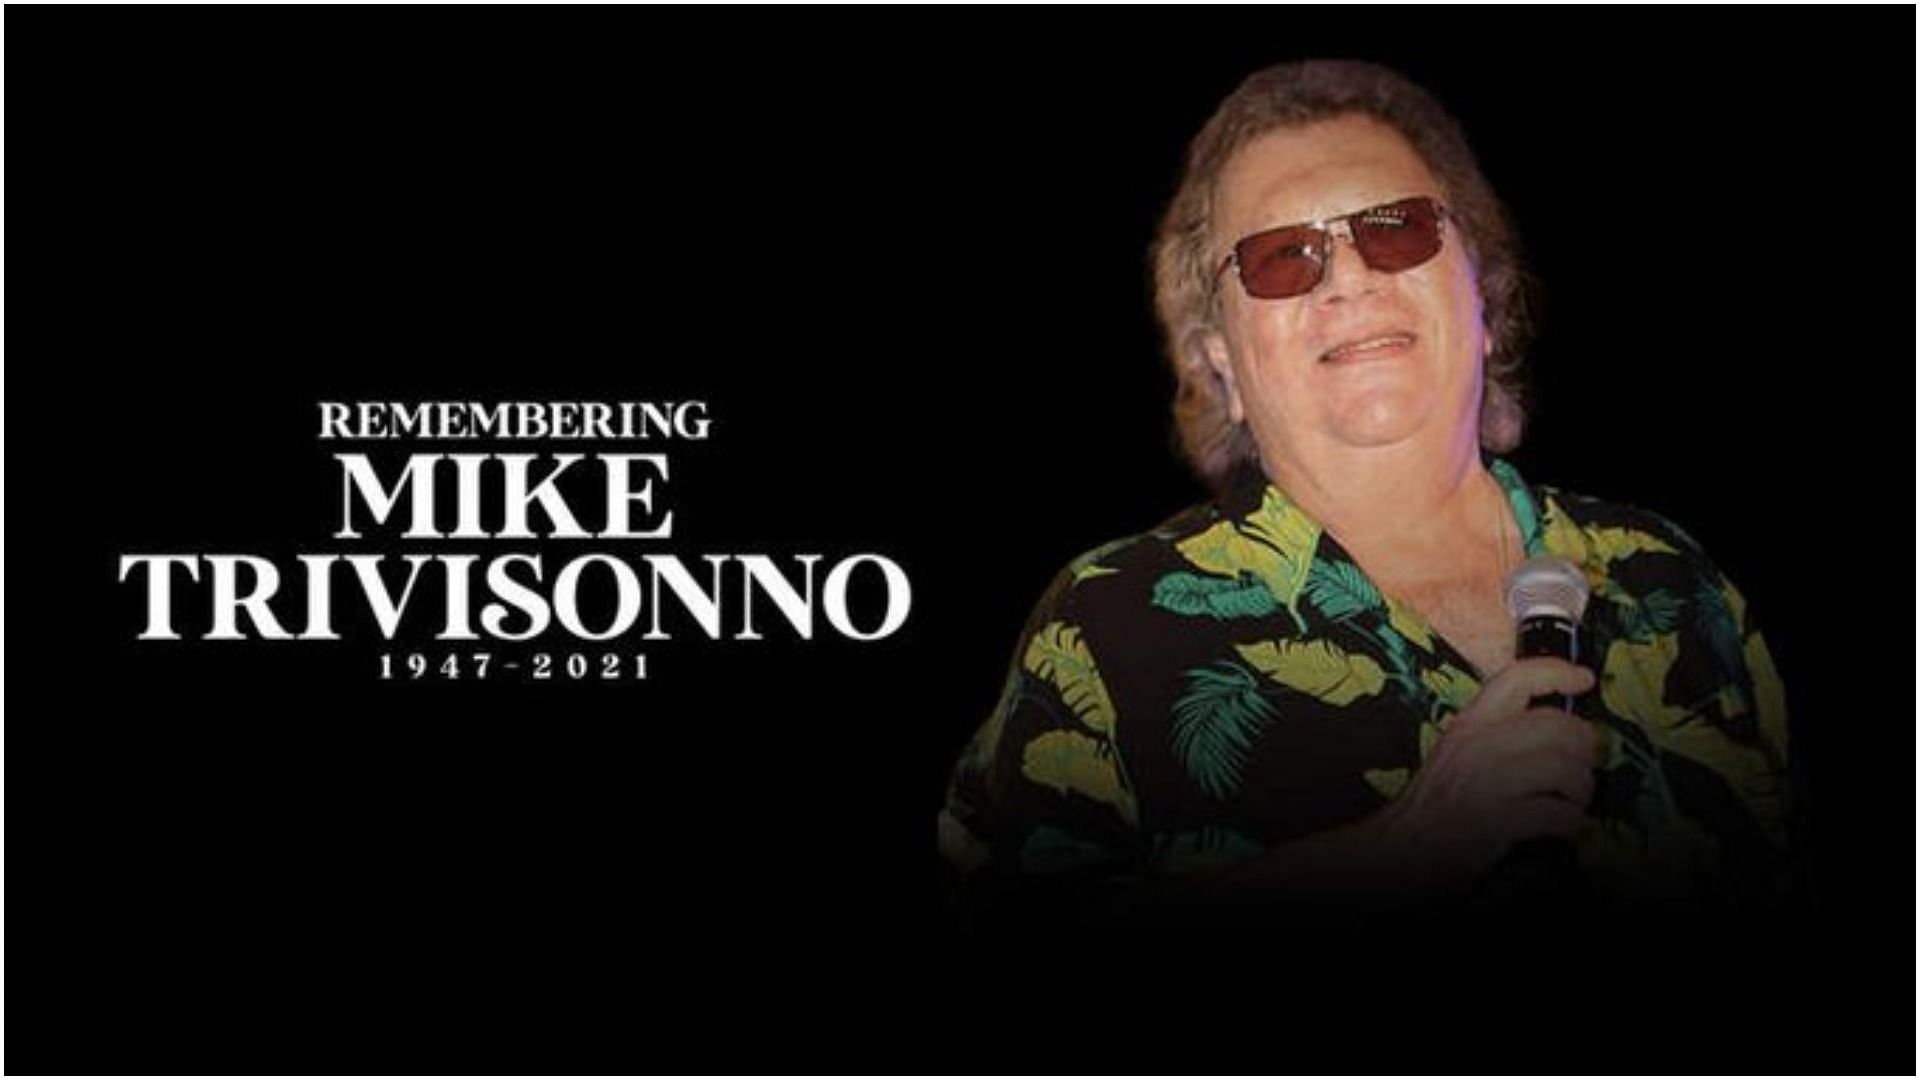 Mike Trivisonno was a renowned show host (Image via senrobportman/Twitter)